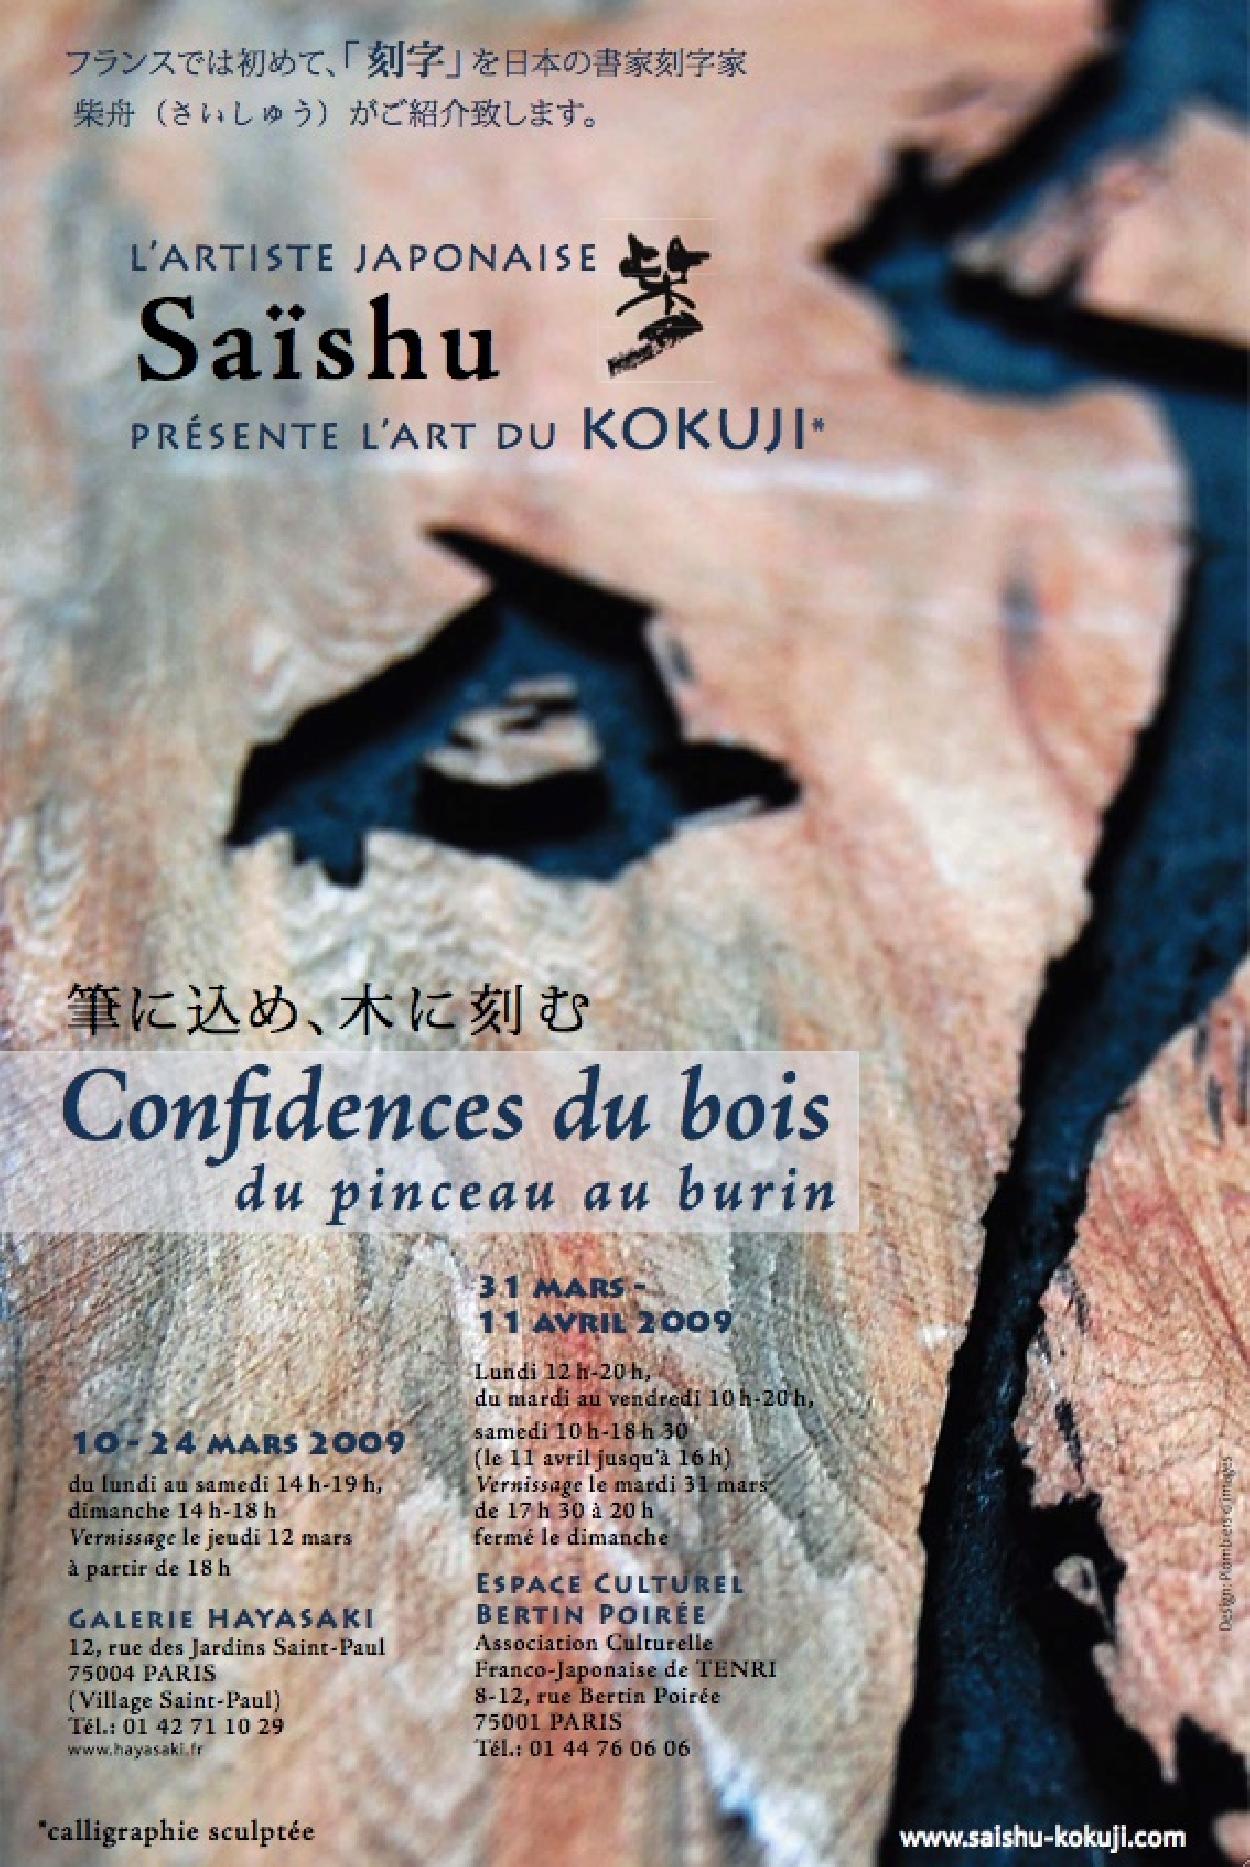 Saïshu, Kokuji,Calligraphie sculptée, 10 mars - 24 mars 2009